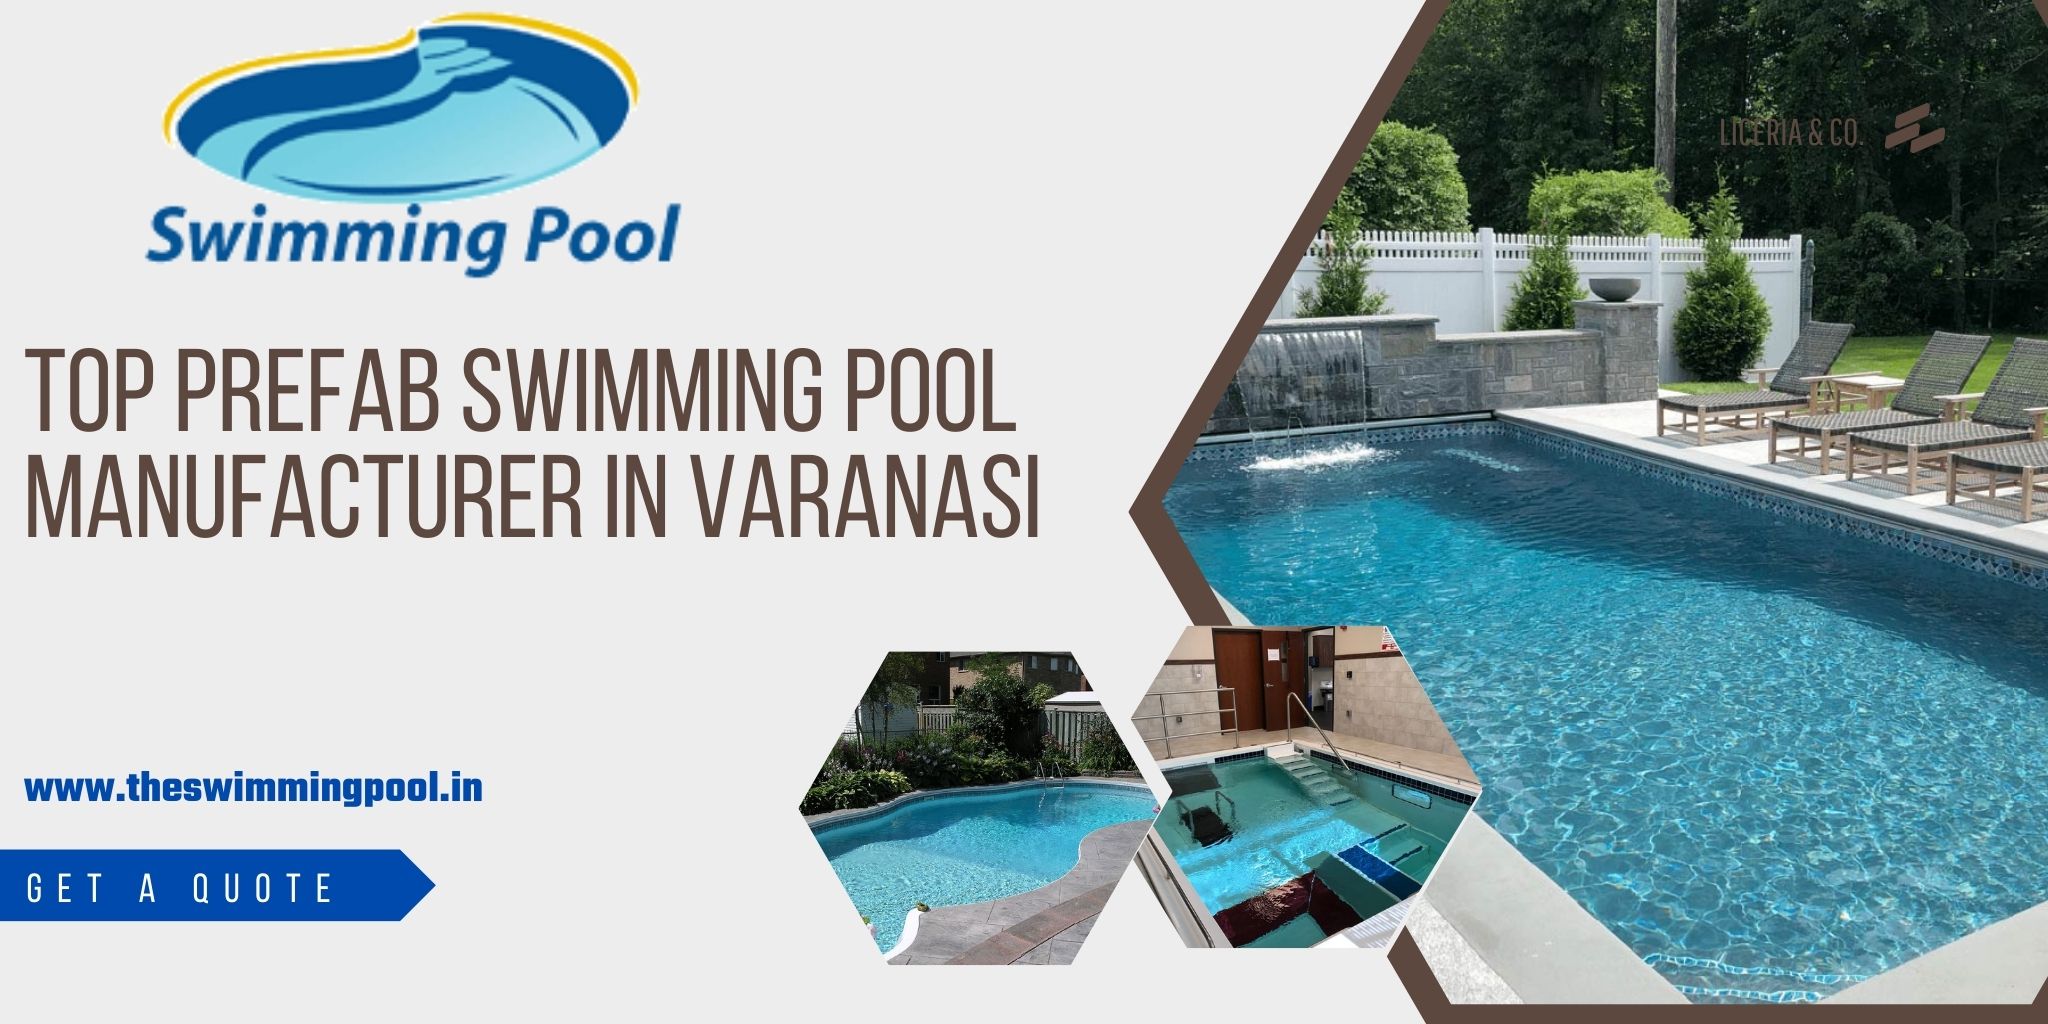 Prefab Swimming Pool Manufacturer In Varanasi